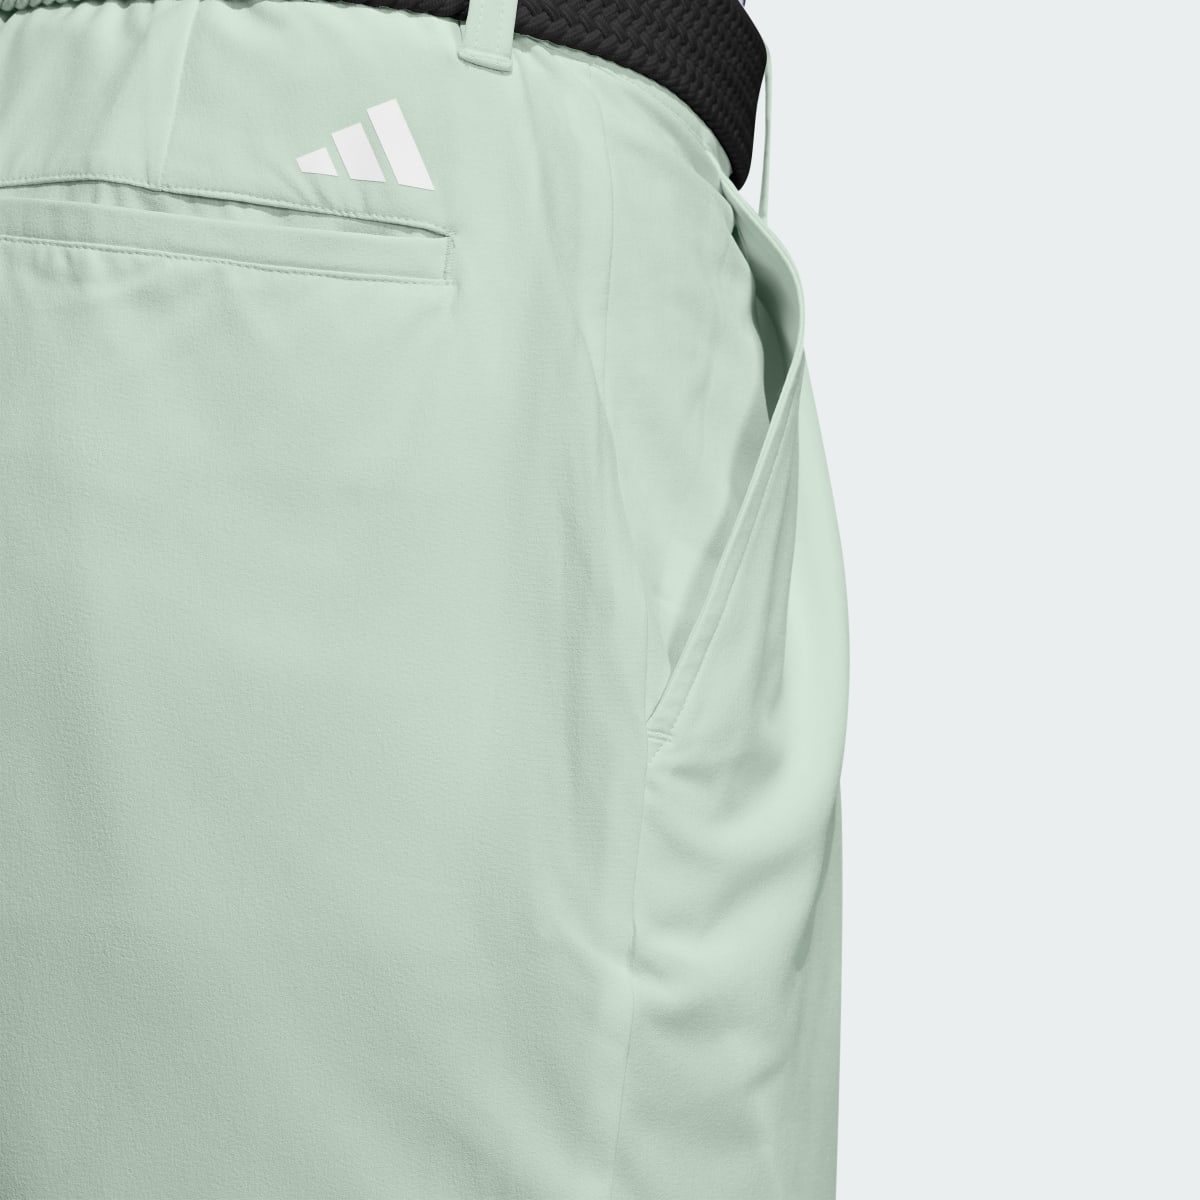 Adidas Shorts de Golf Ultimate365 8,5 Pulgadas. 6